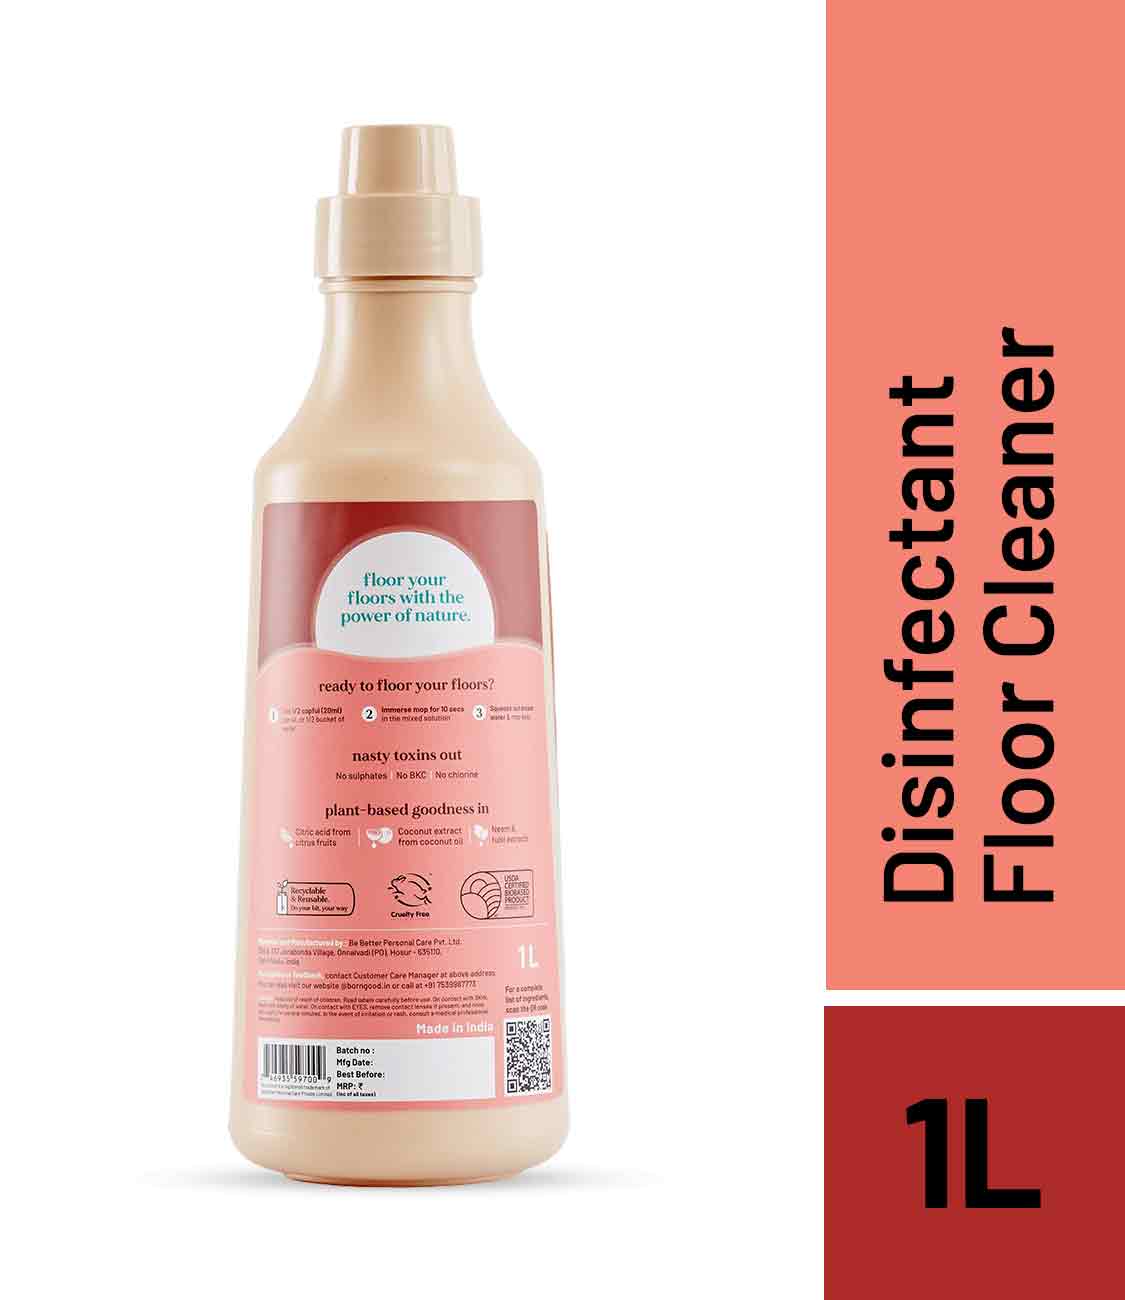 Born Good Plant-based Disinfectant Floor Cleaner - 1 L Bottle